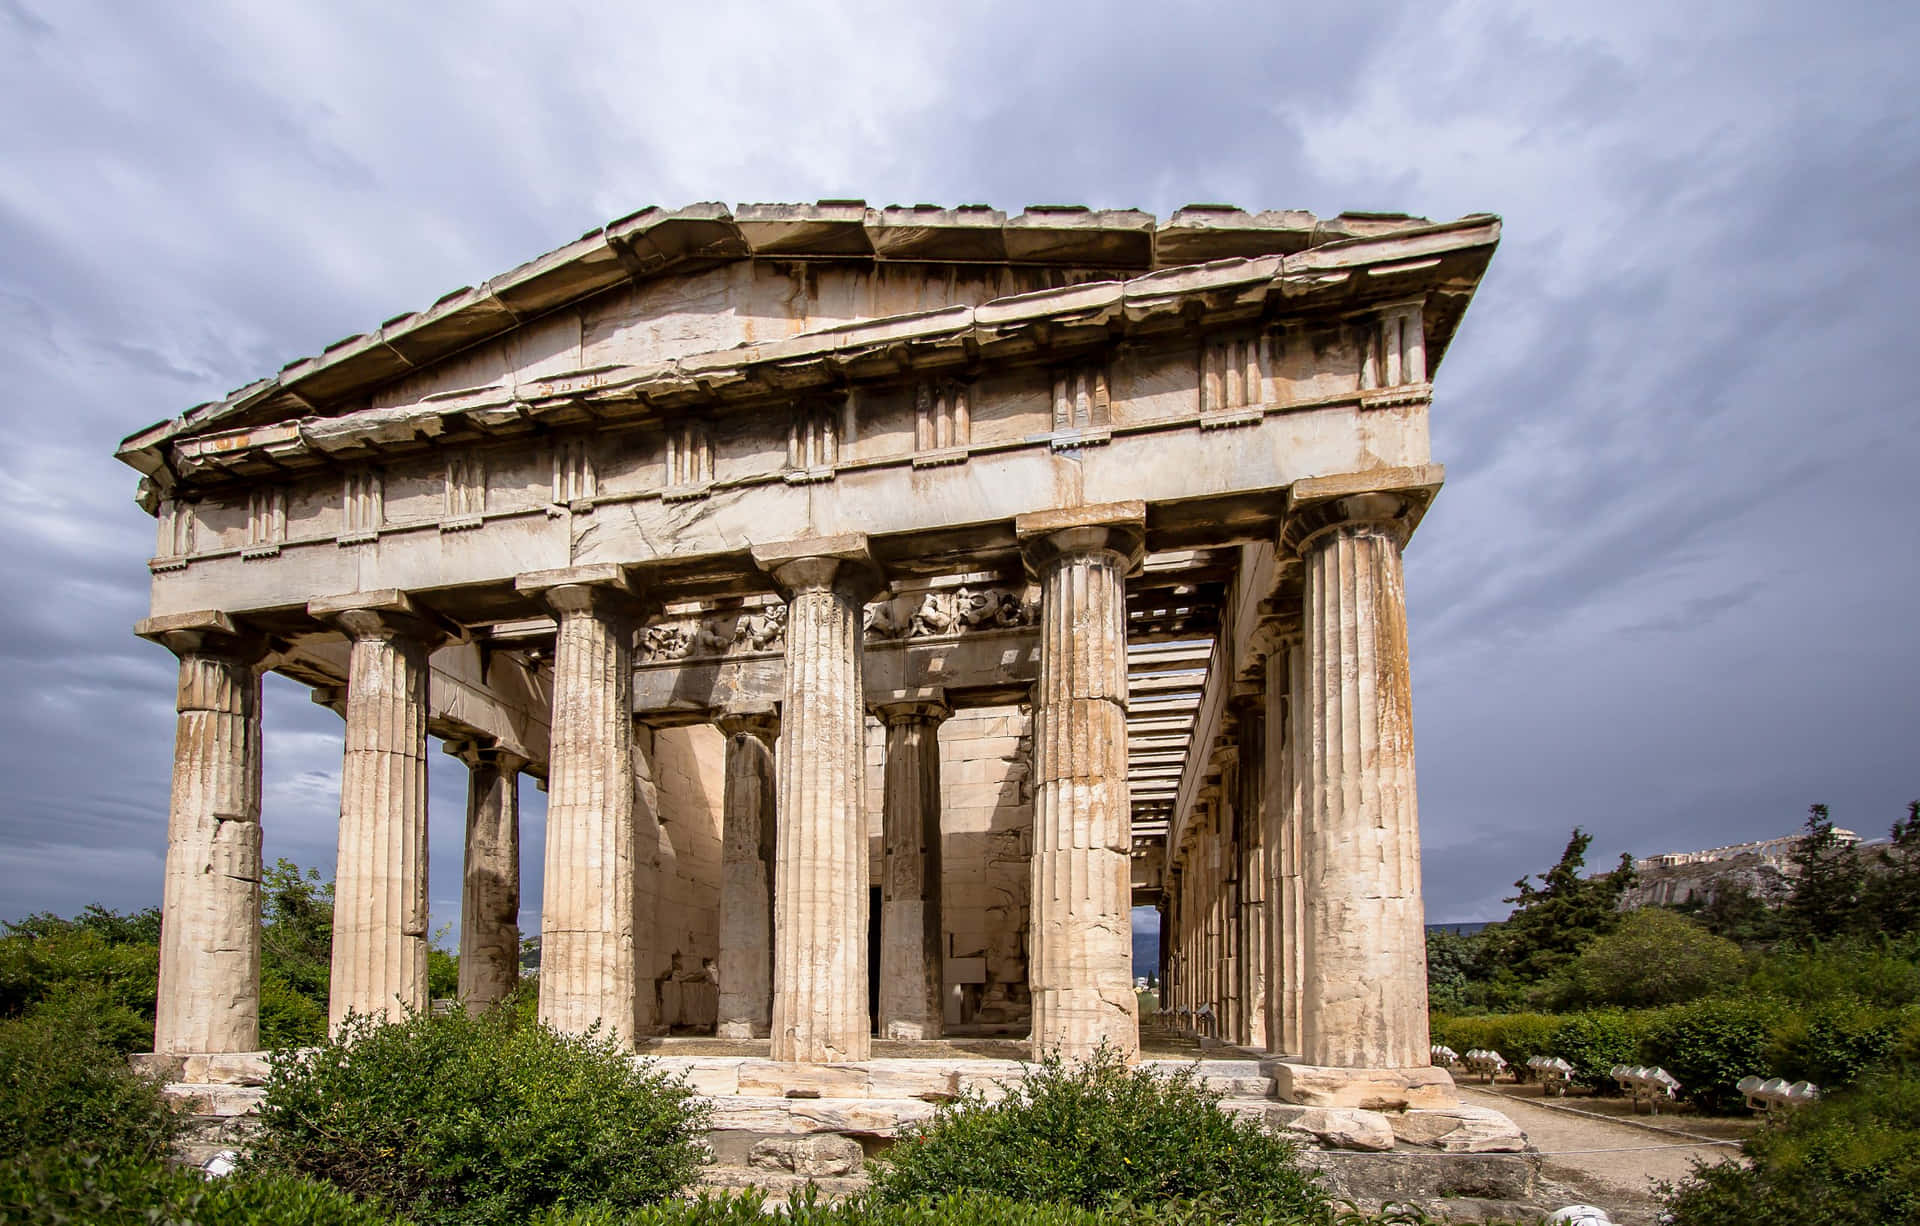 Explore Greece and all its splendor